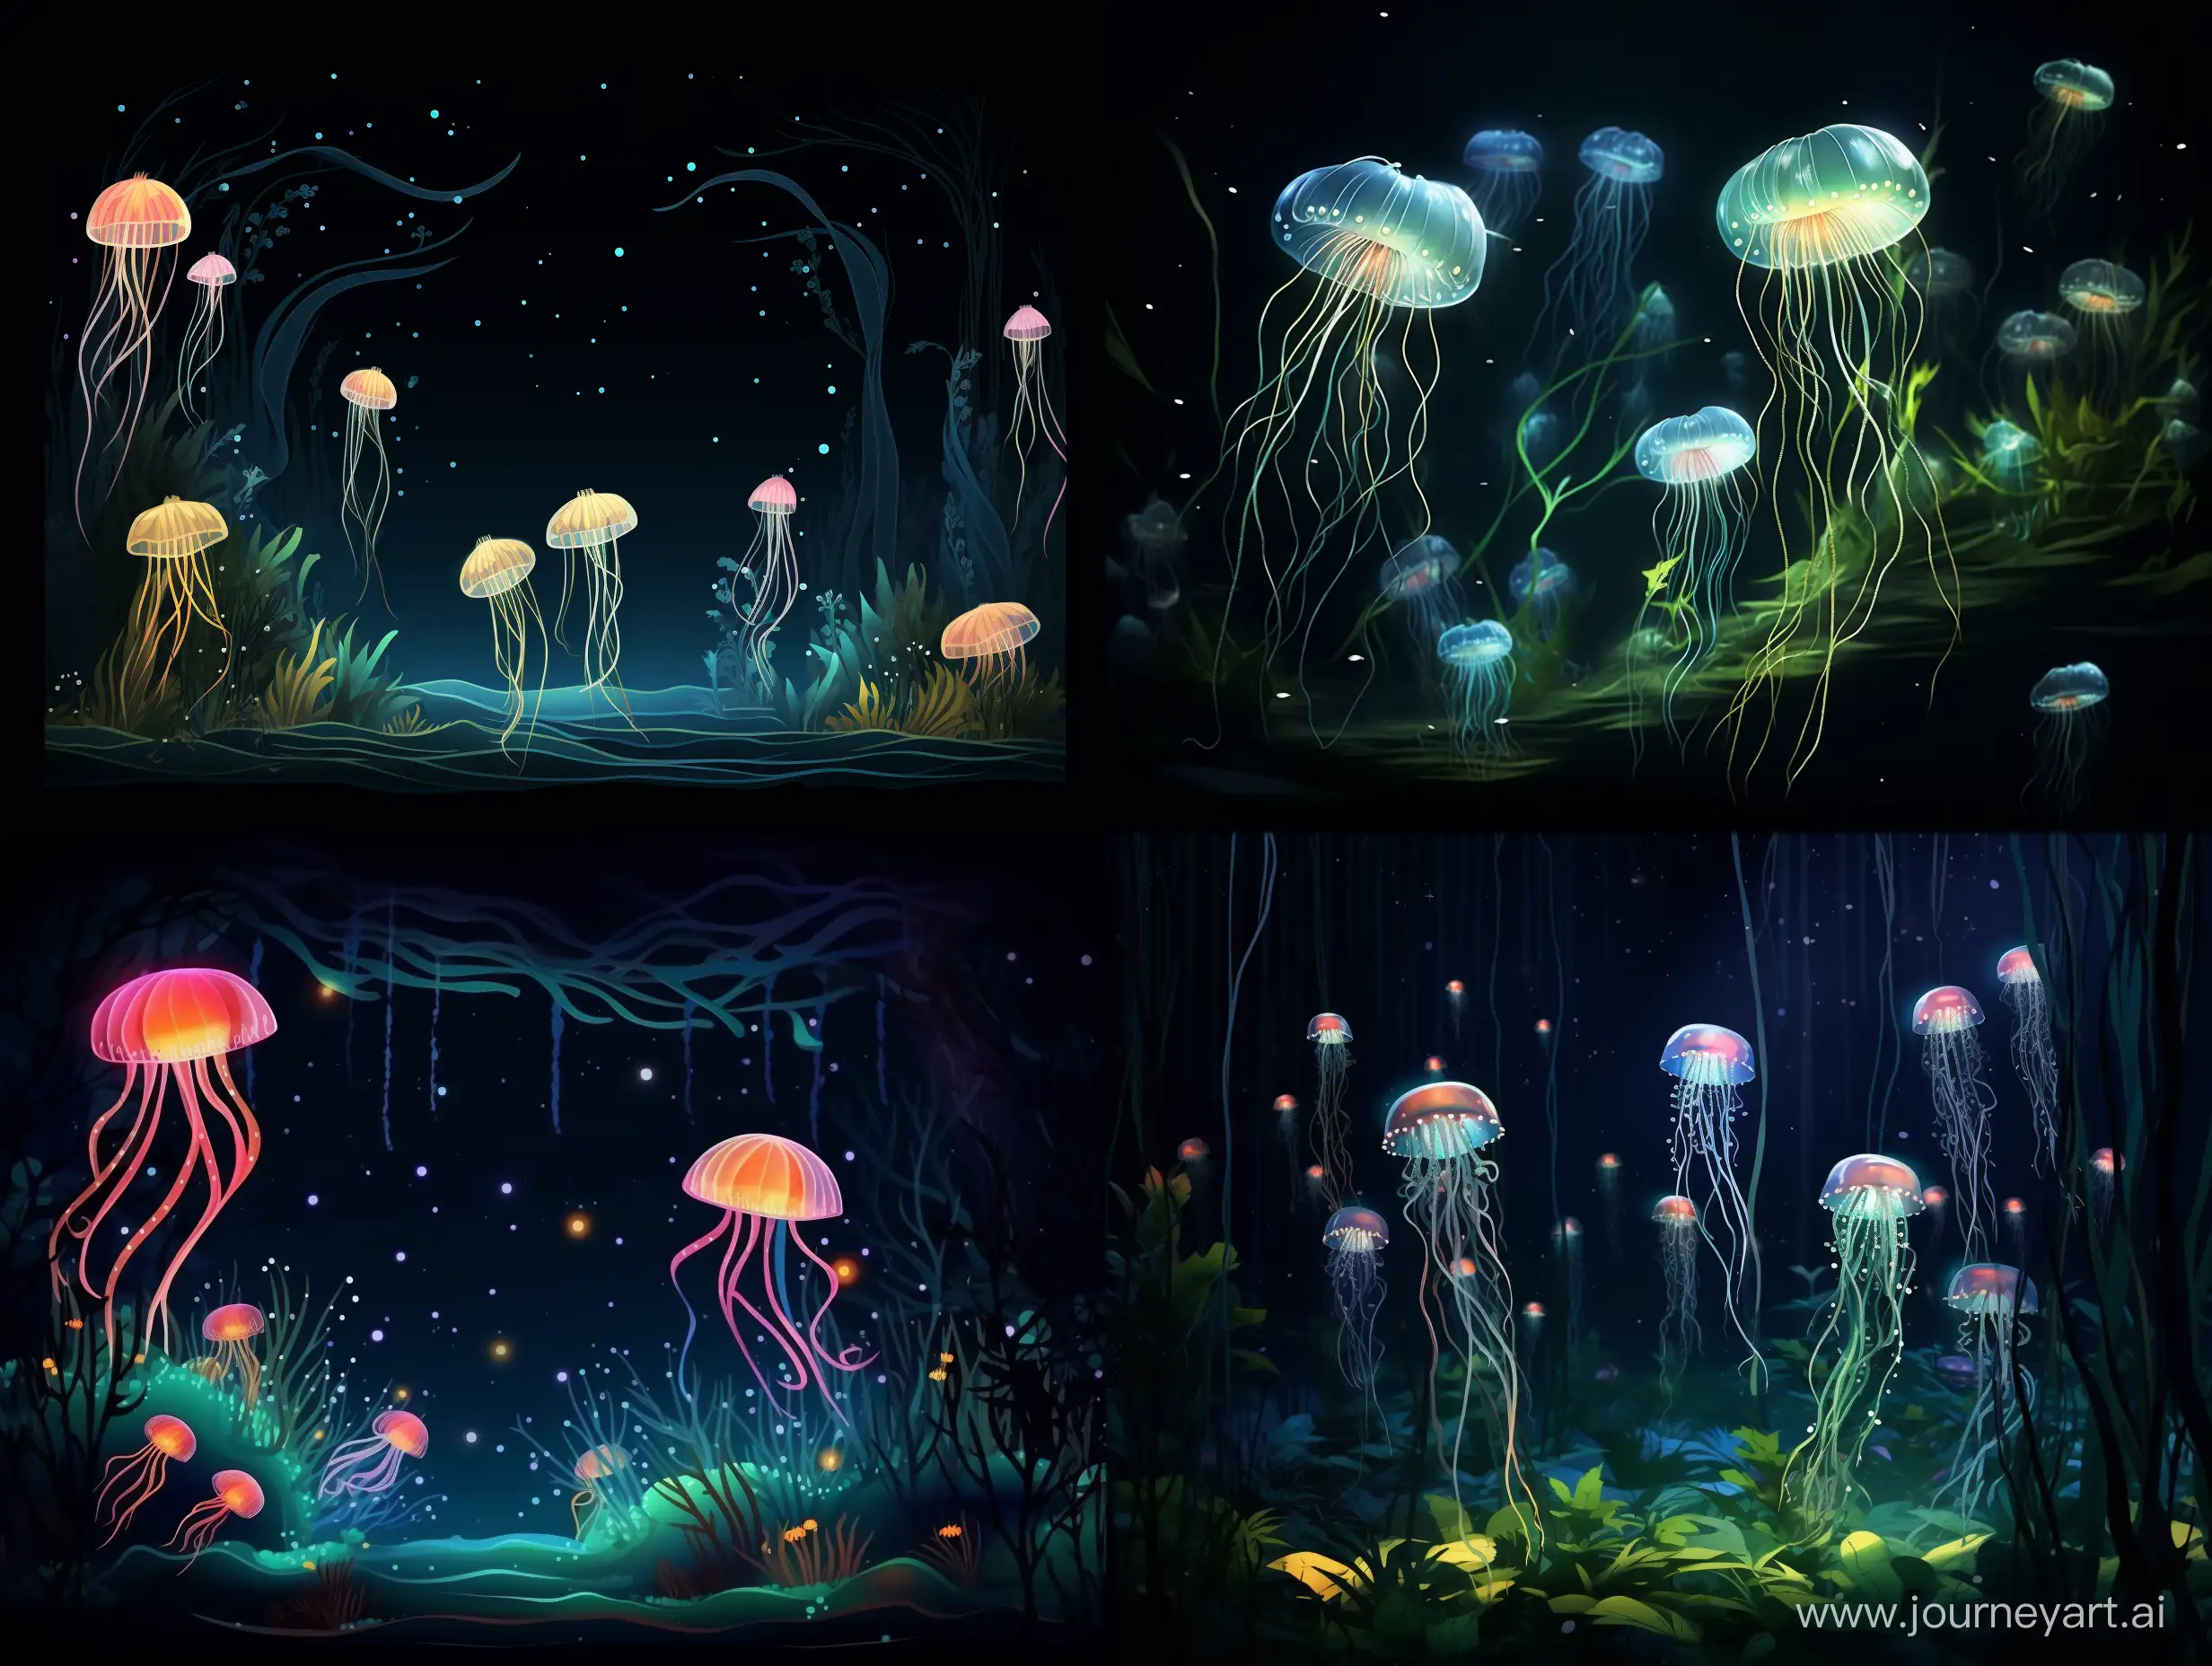 Enchanting-Bioluminescent-Aquatic-Plants-and-Jellyfish-in-Dark-Underwater-Scene